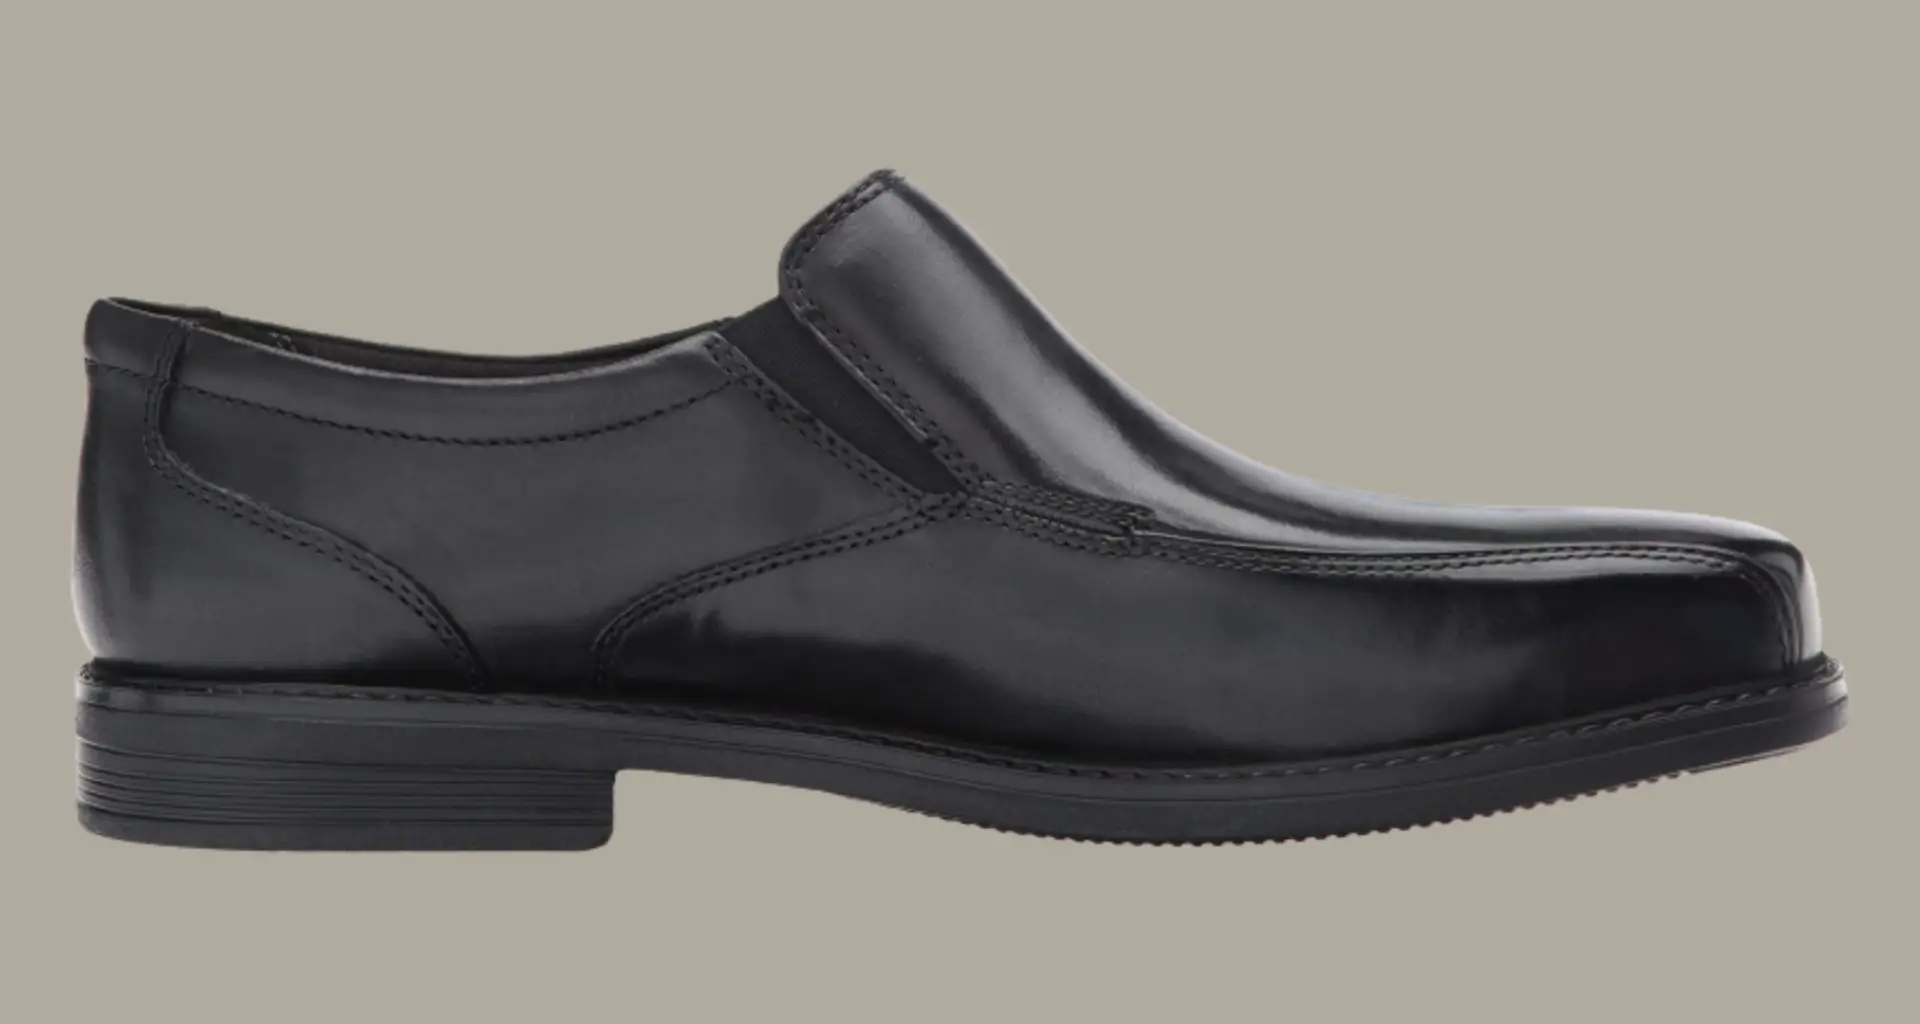 Best men's formal shoe lesser than $100